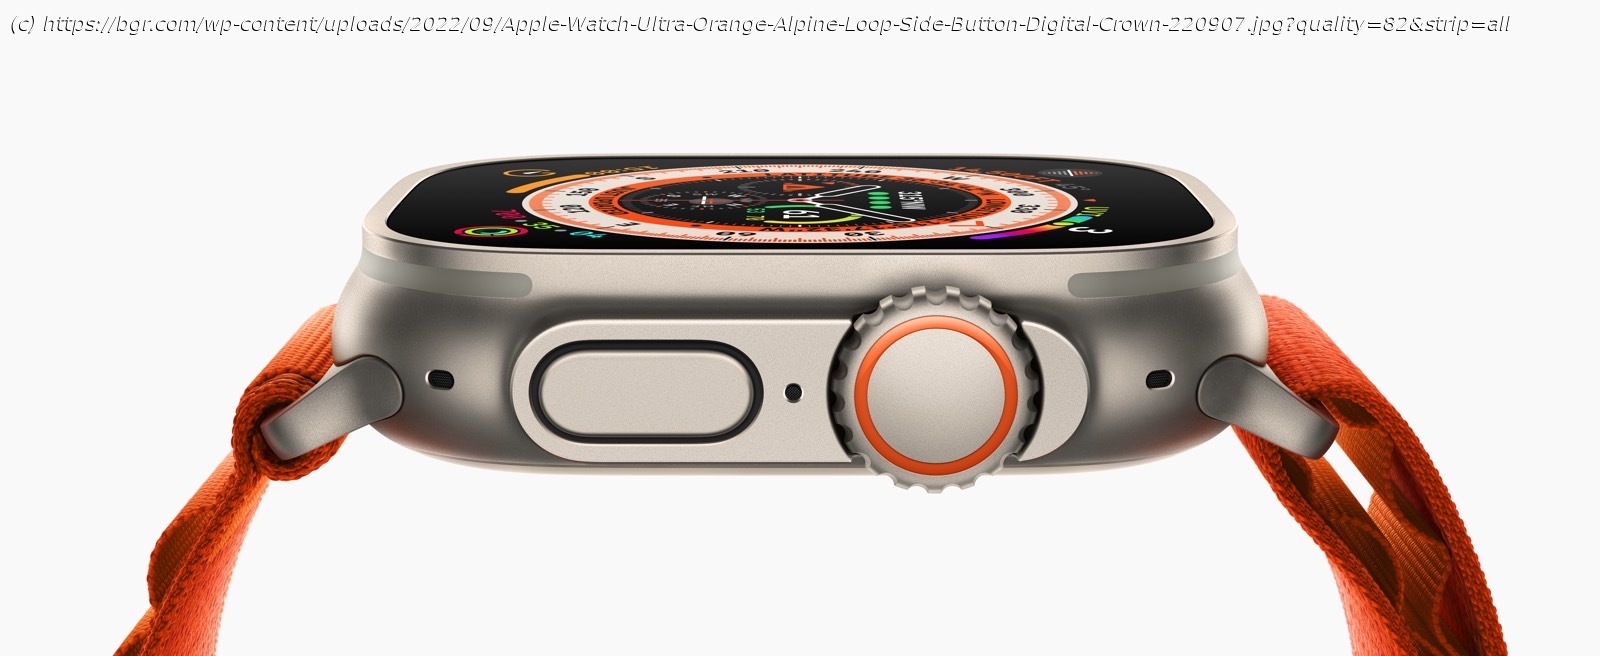 microLED Apple Watch Ultra slated to 2025 NewsHub